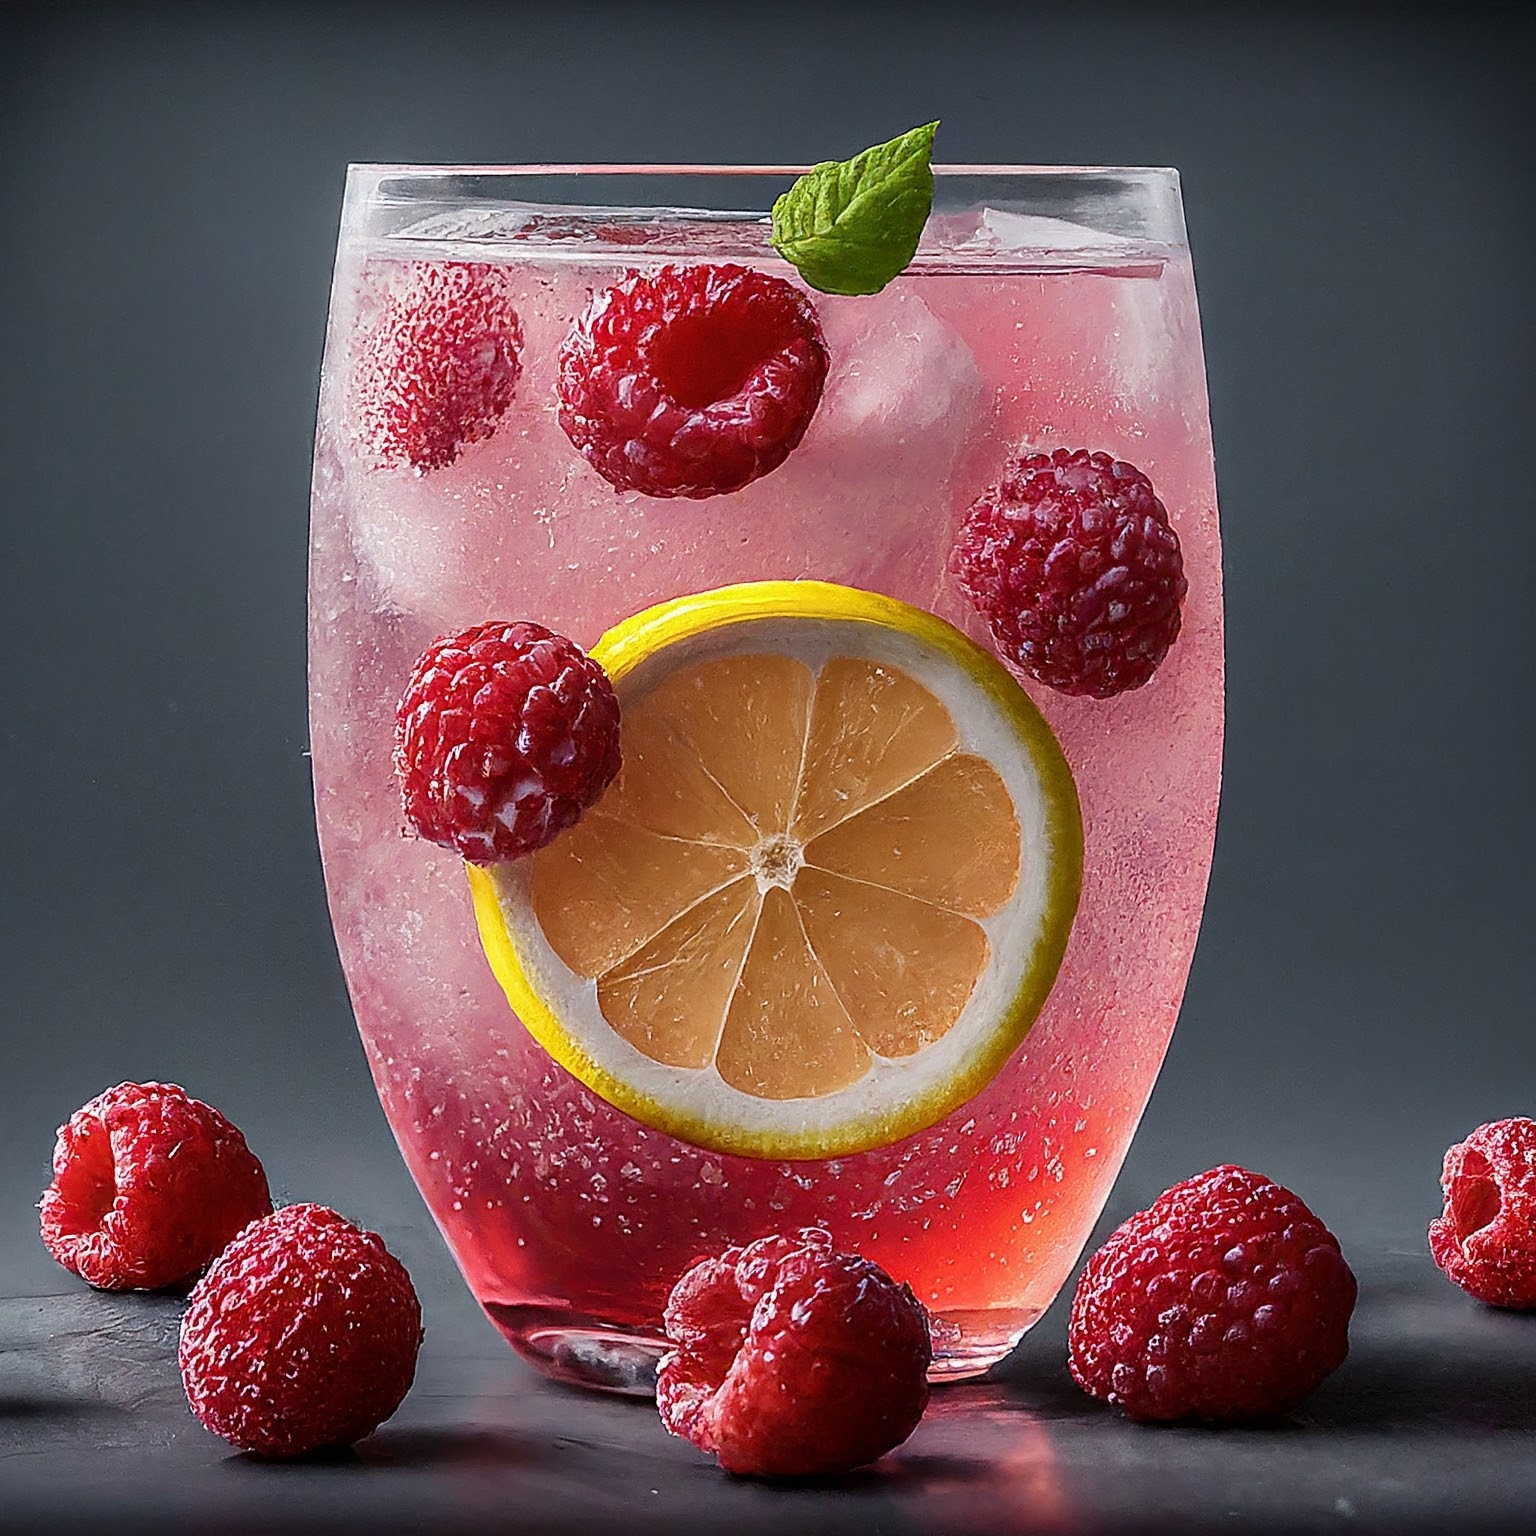 Sparkling Raspberry Lemonade Recipe